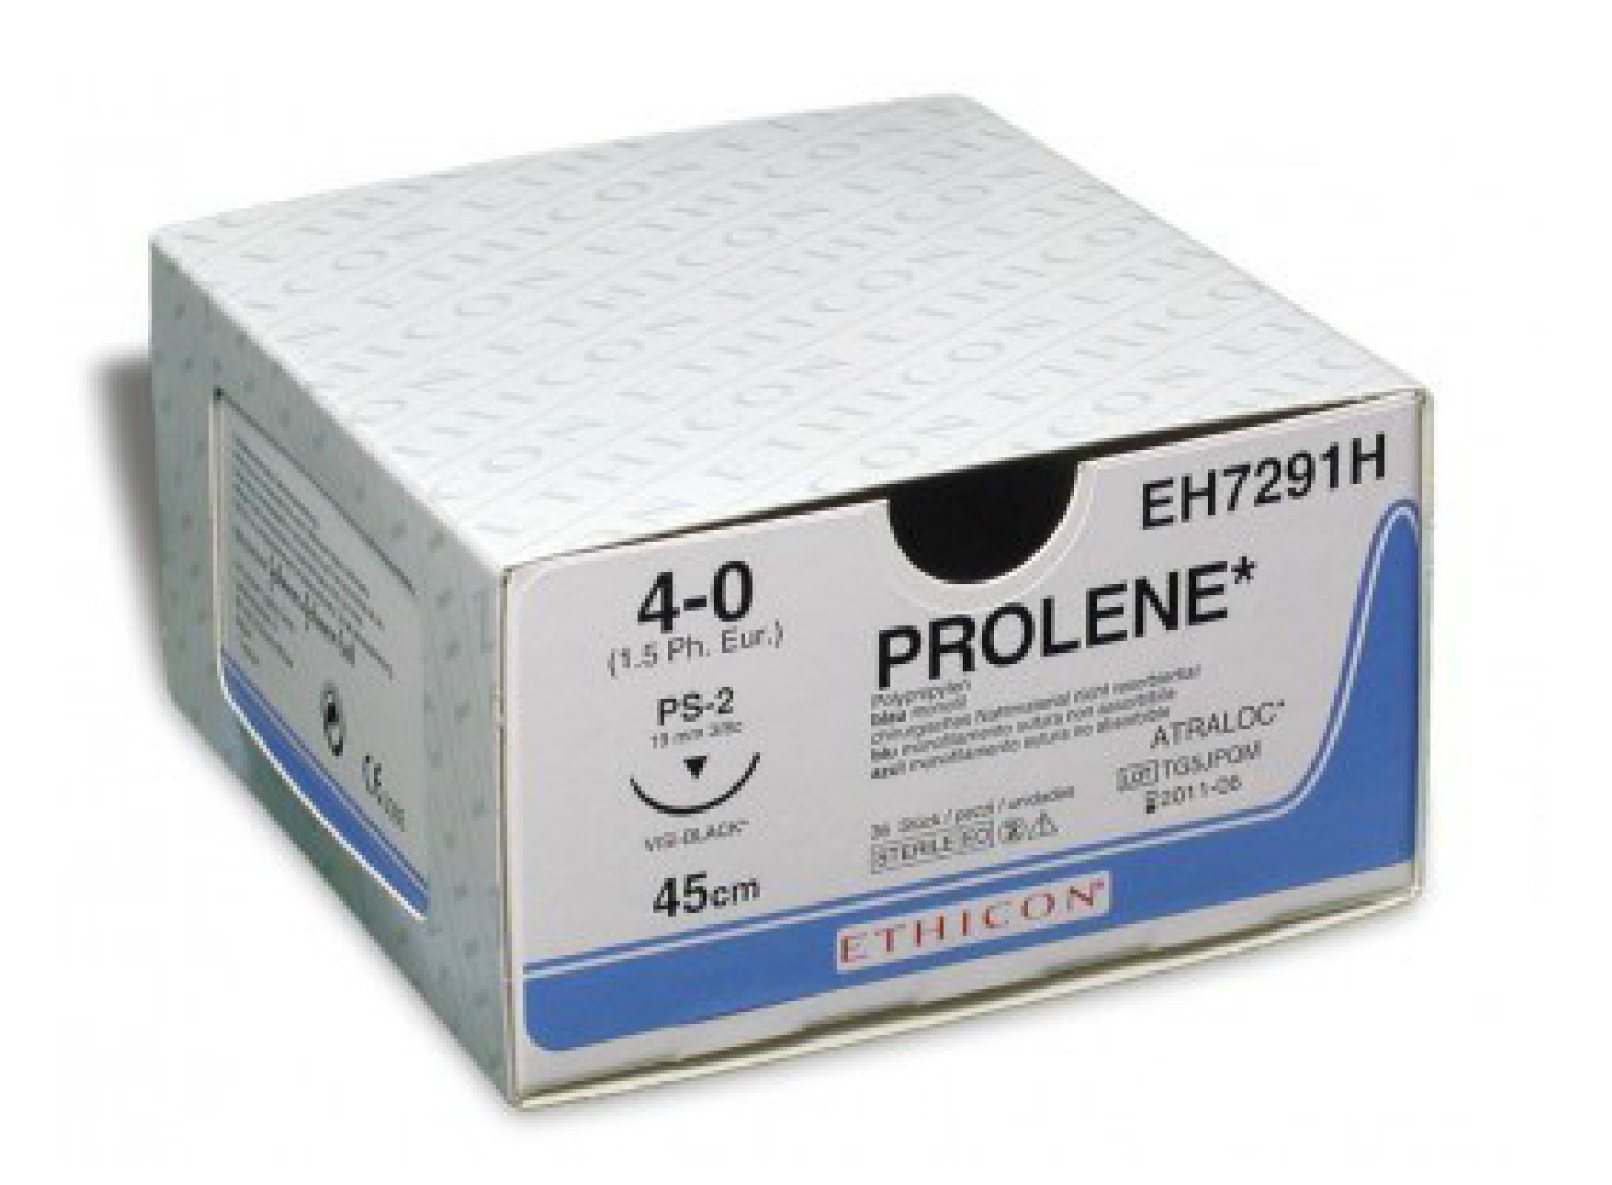 Prolene suture 5-0, 8661H, FS-2 needle. We ship internationally.